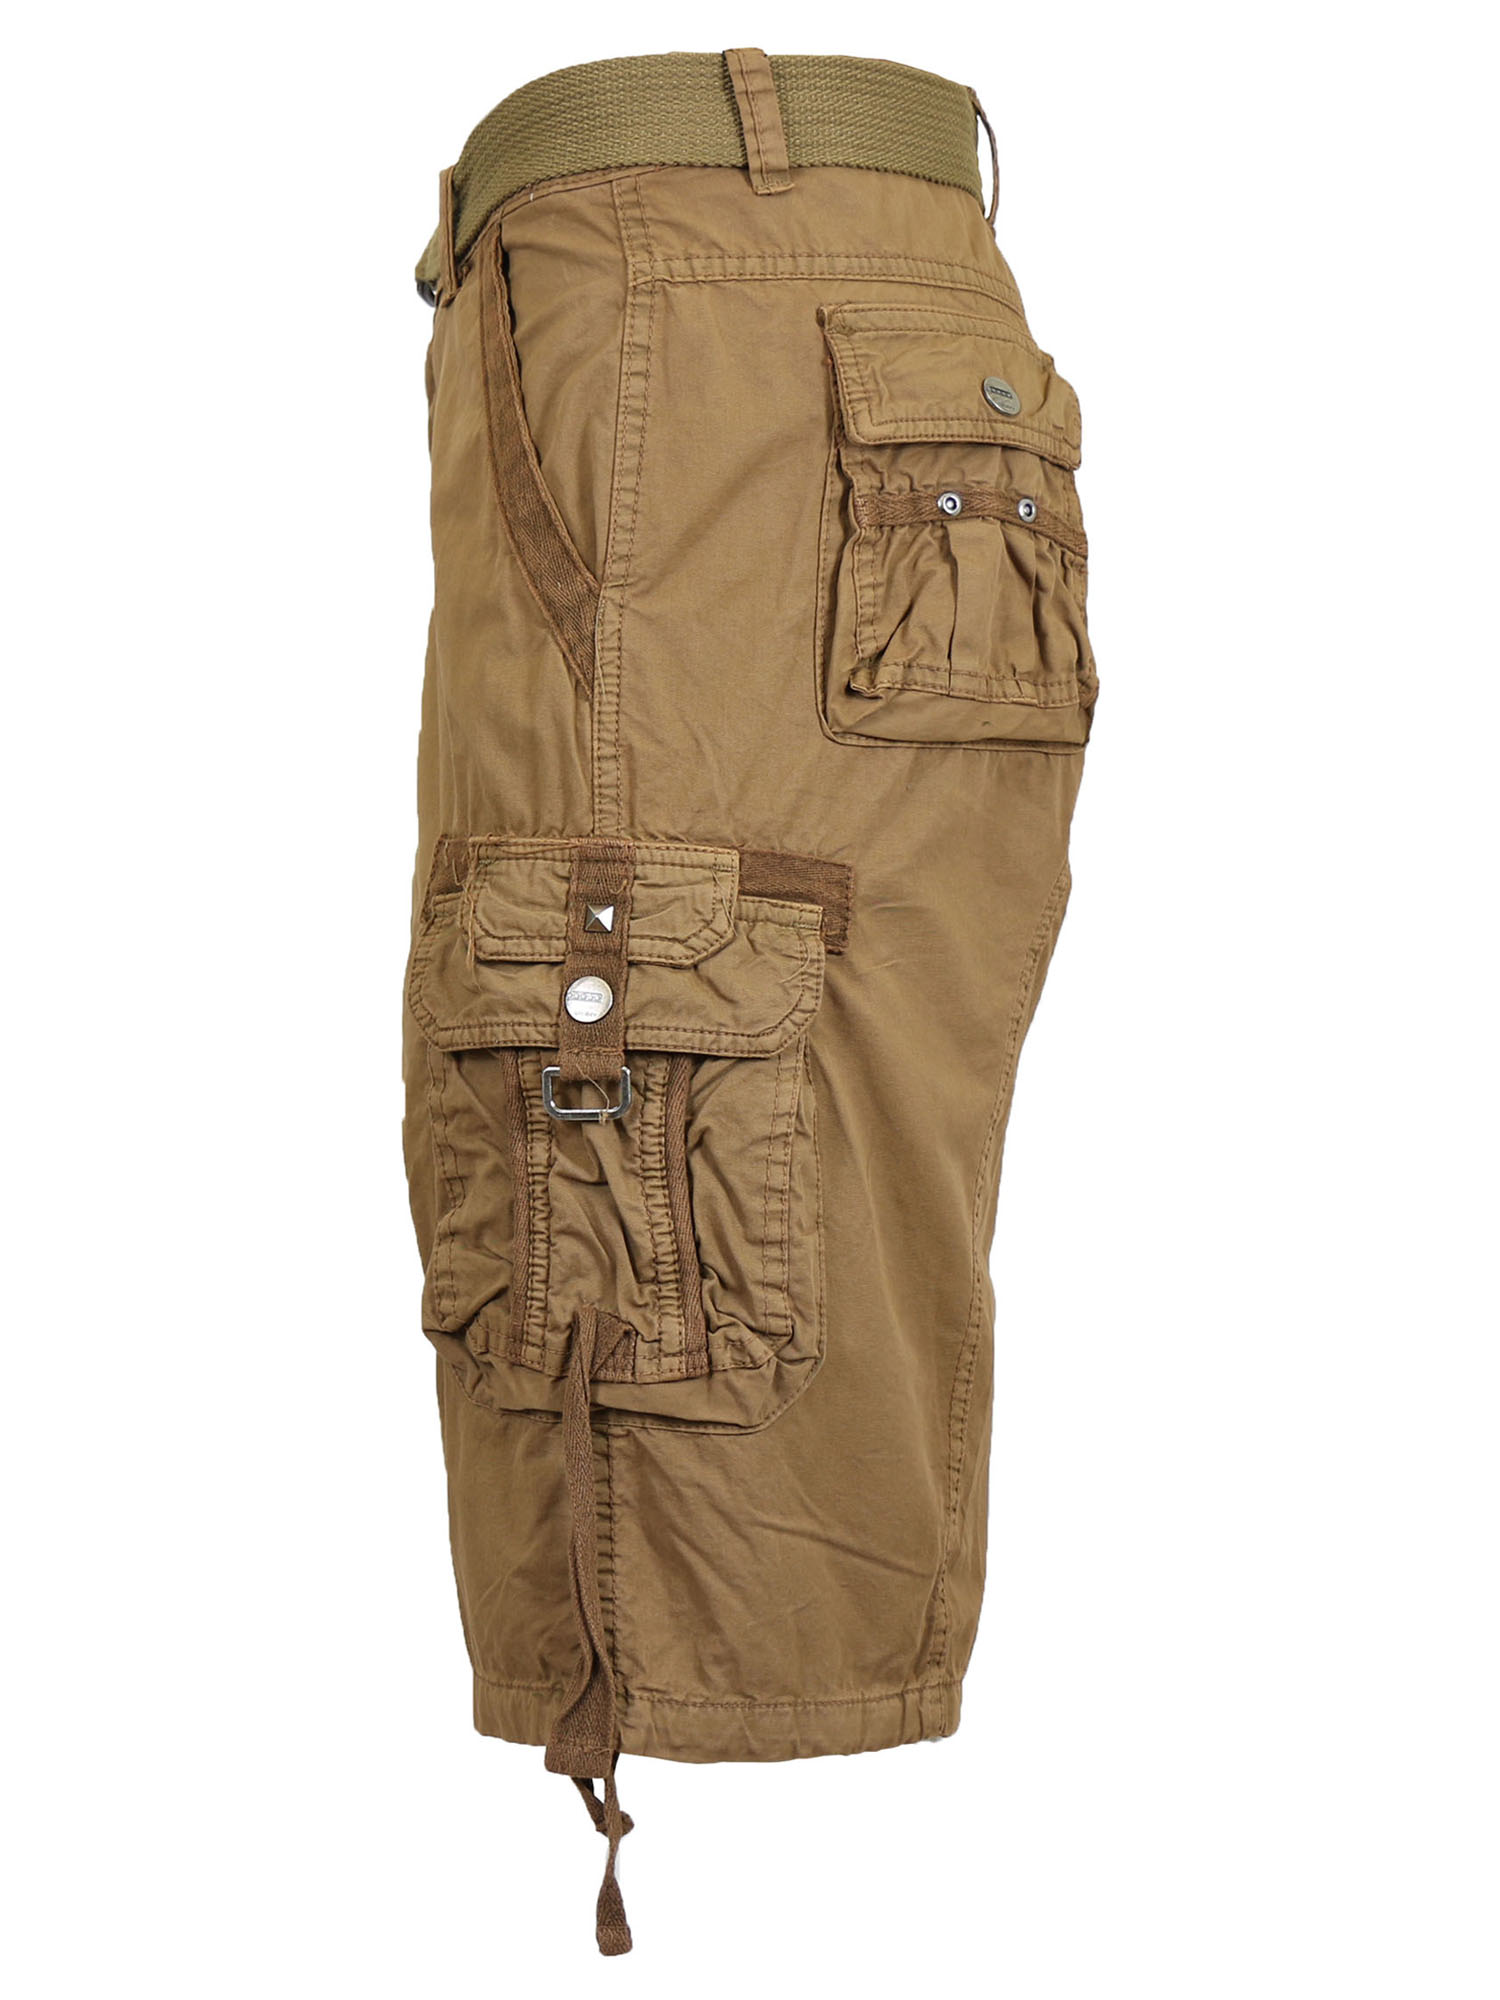 Men's Distressed Vintage Belted Cargo Utility Shorts (Size 30-48) - image 2 of 4